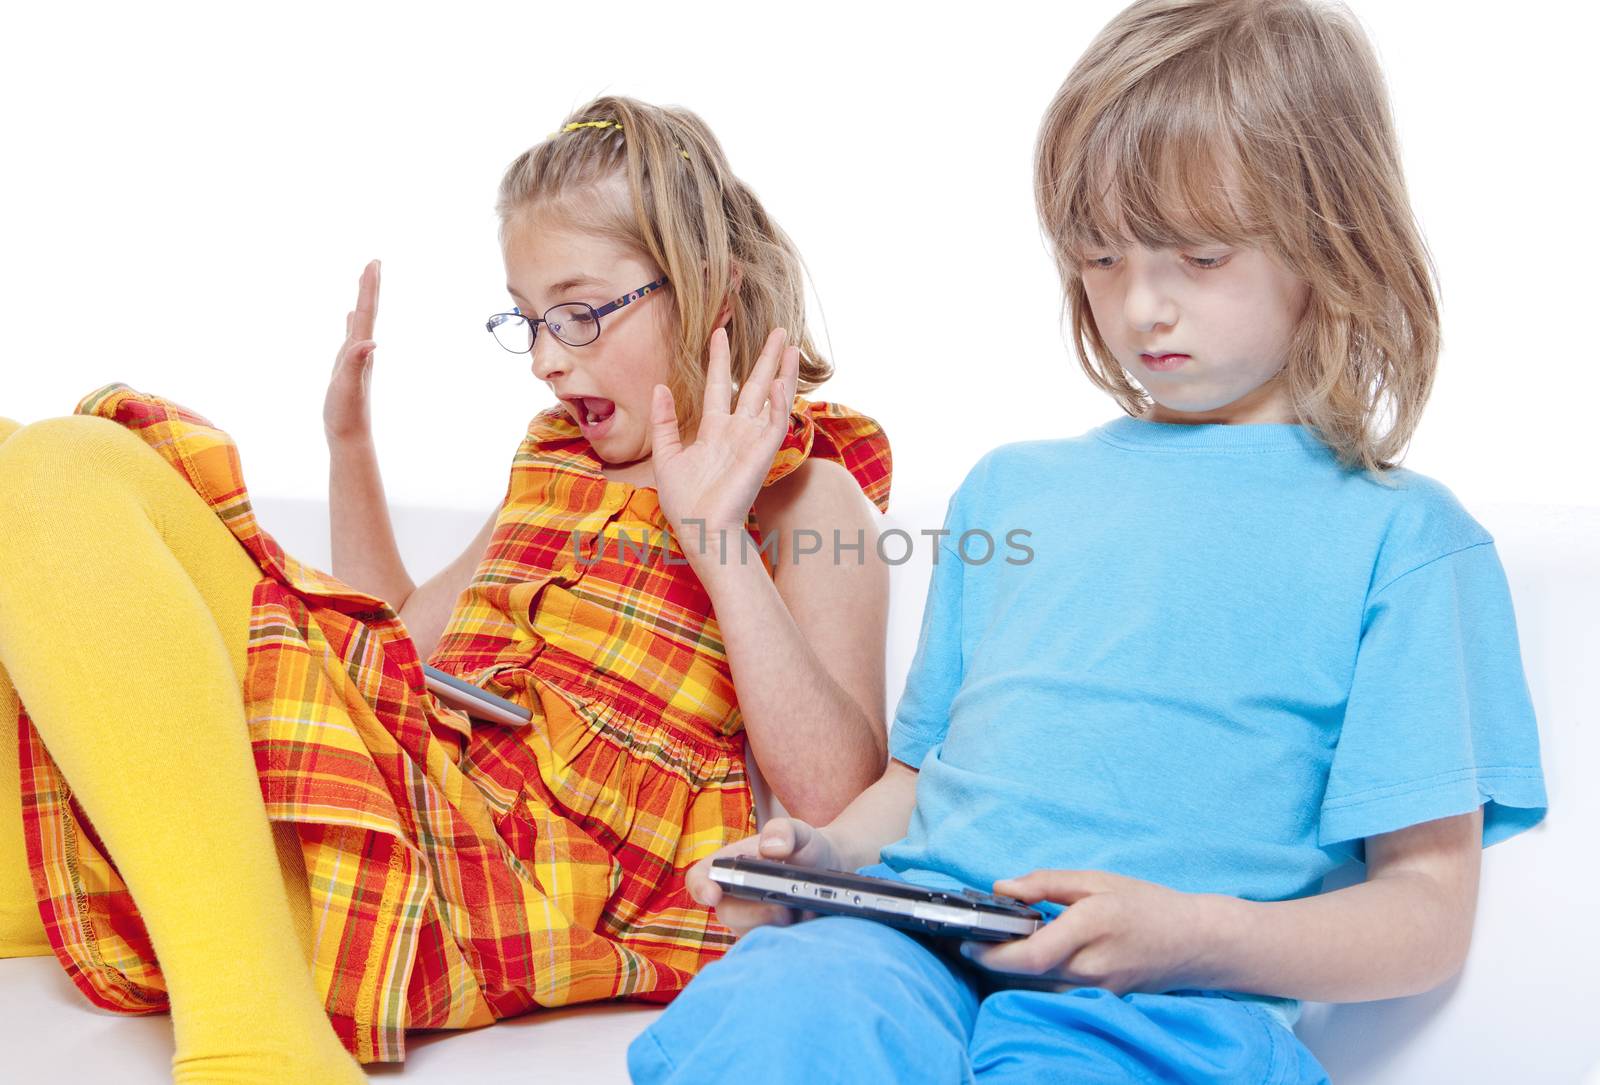 Two Children Having Fun with Digital Gadgets by courtyardpix